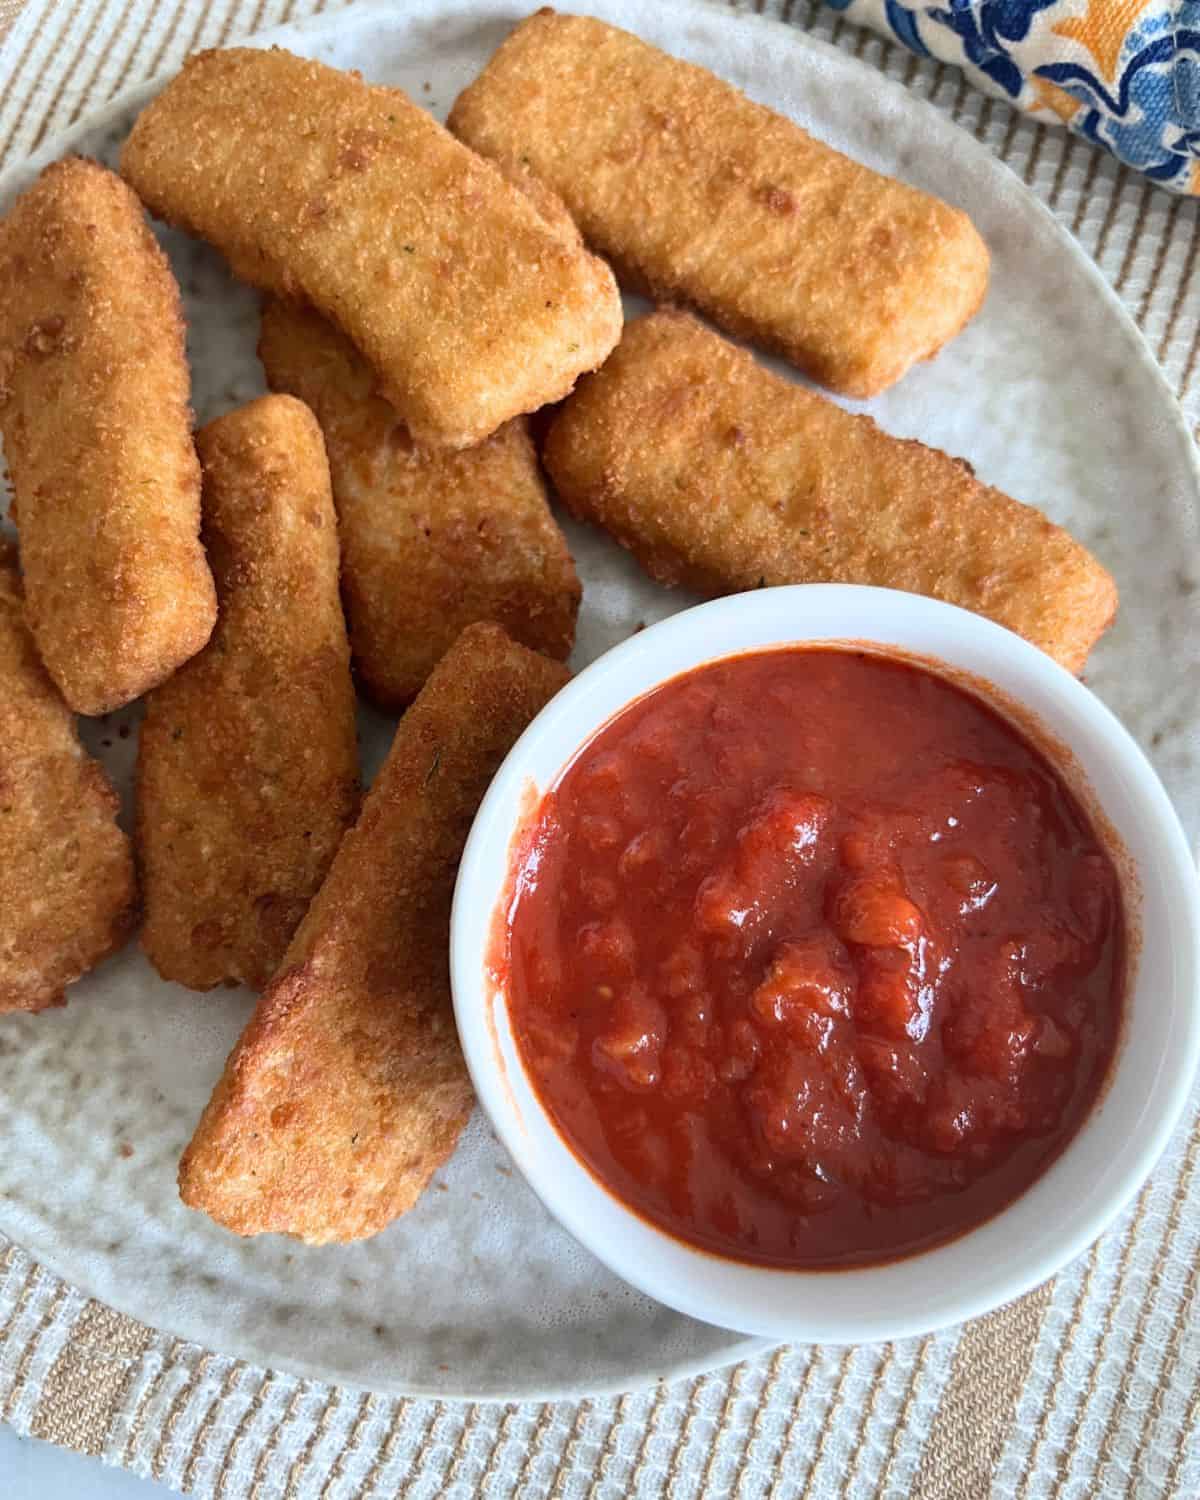 Air fried mozzarella sticks next to a side a marinara sauce on a grey plate. 